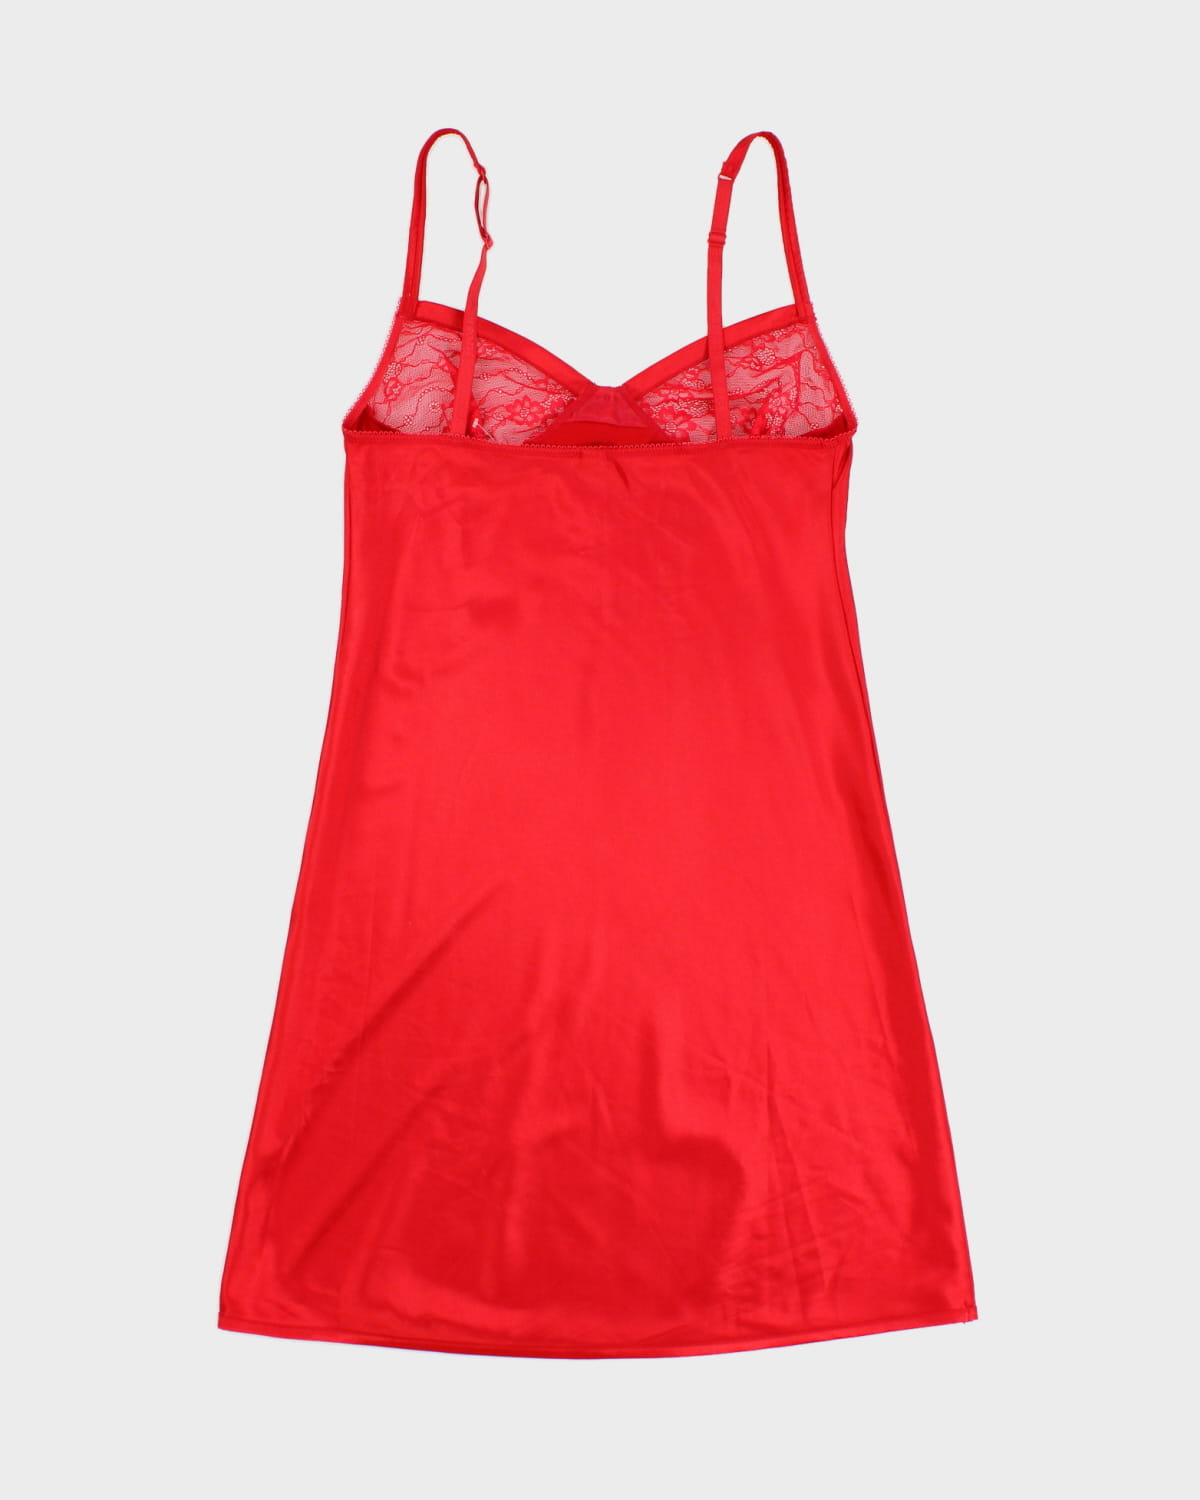 Emporio Armani Red Slip Dress - XS